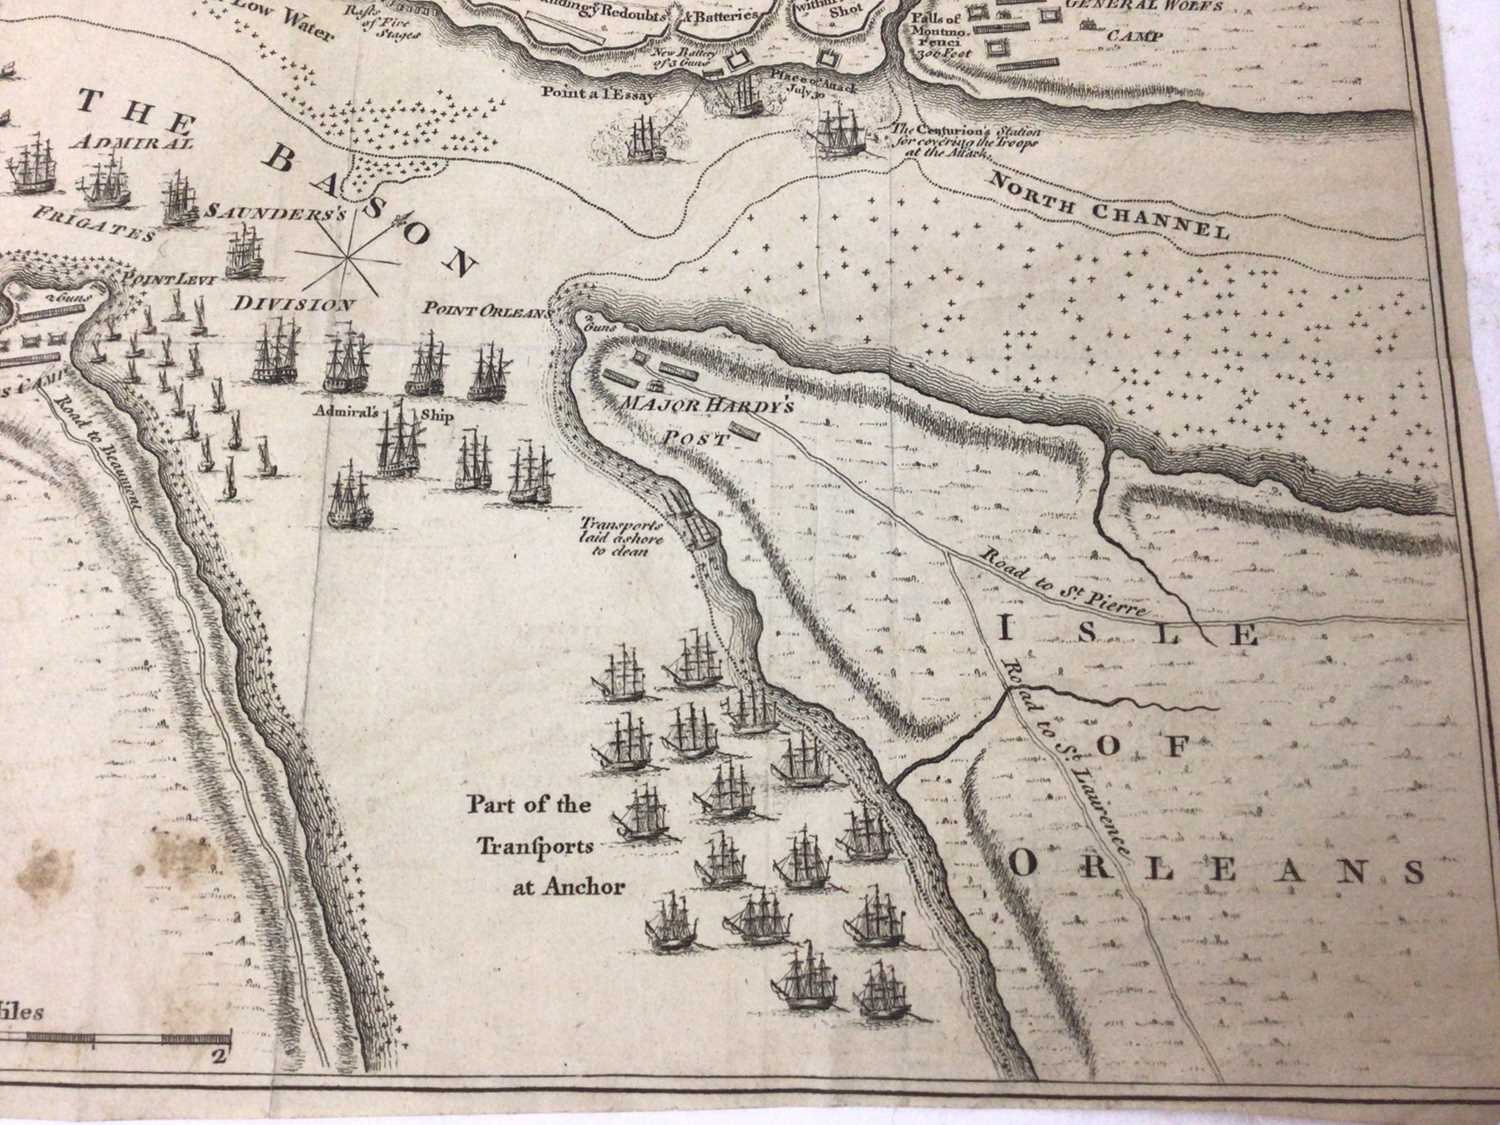 1759 siege of Quebec map - Image 6 of 7